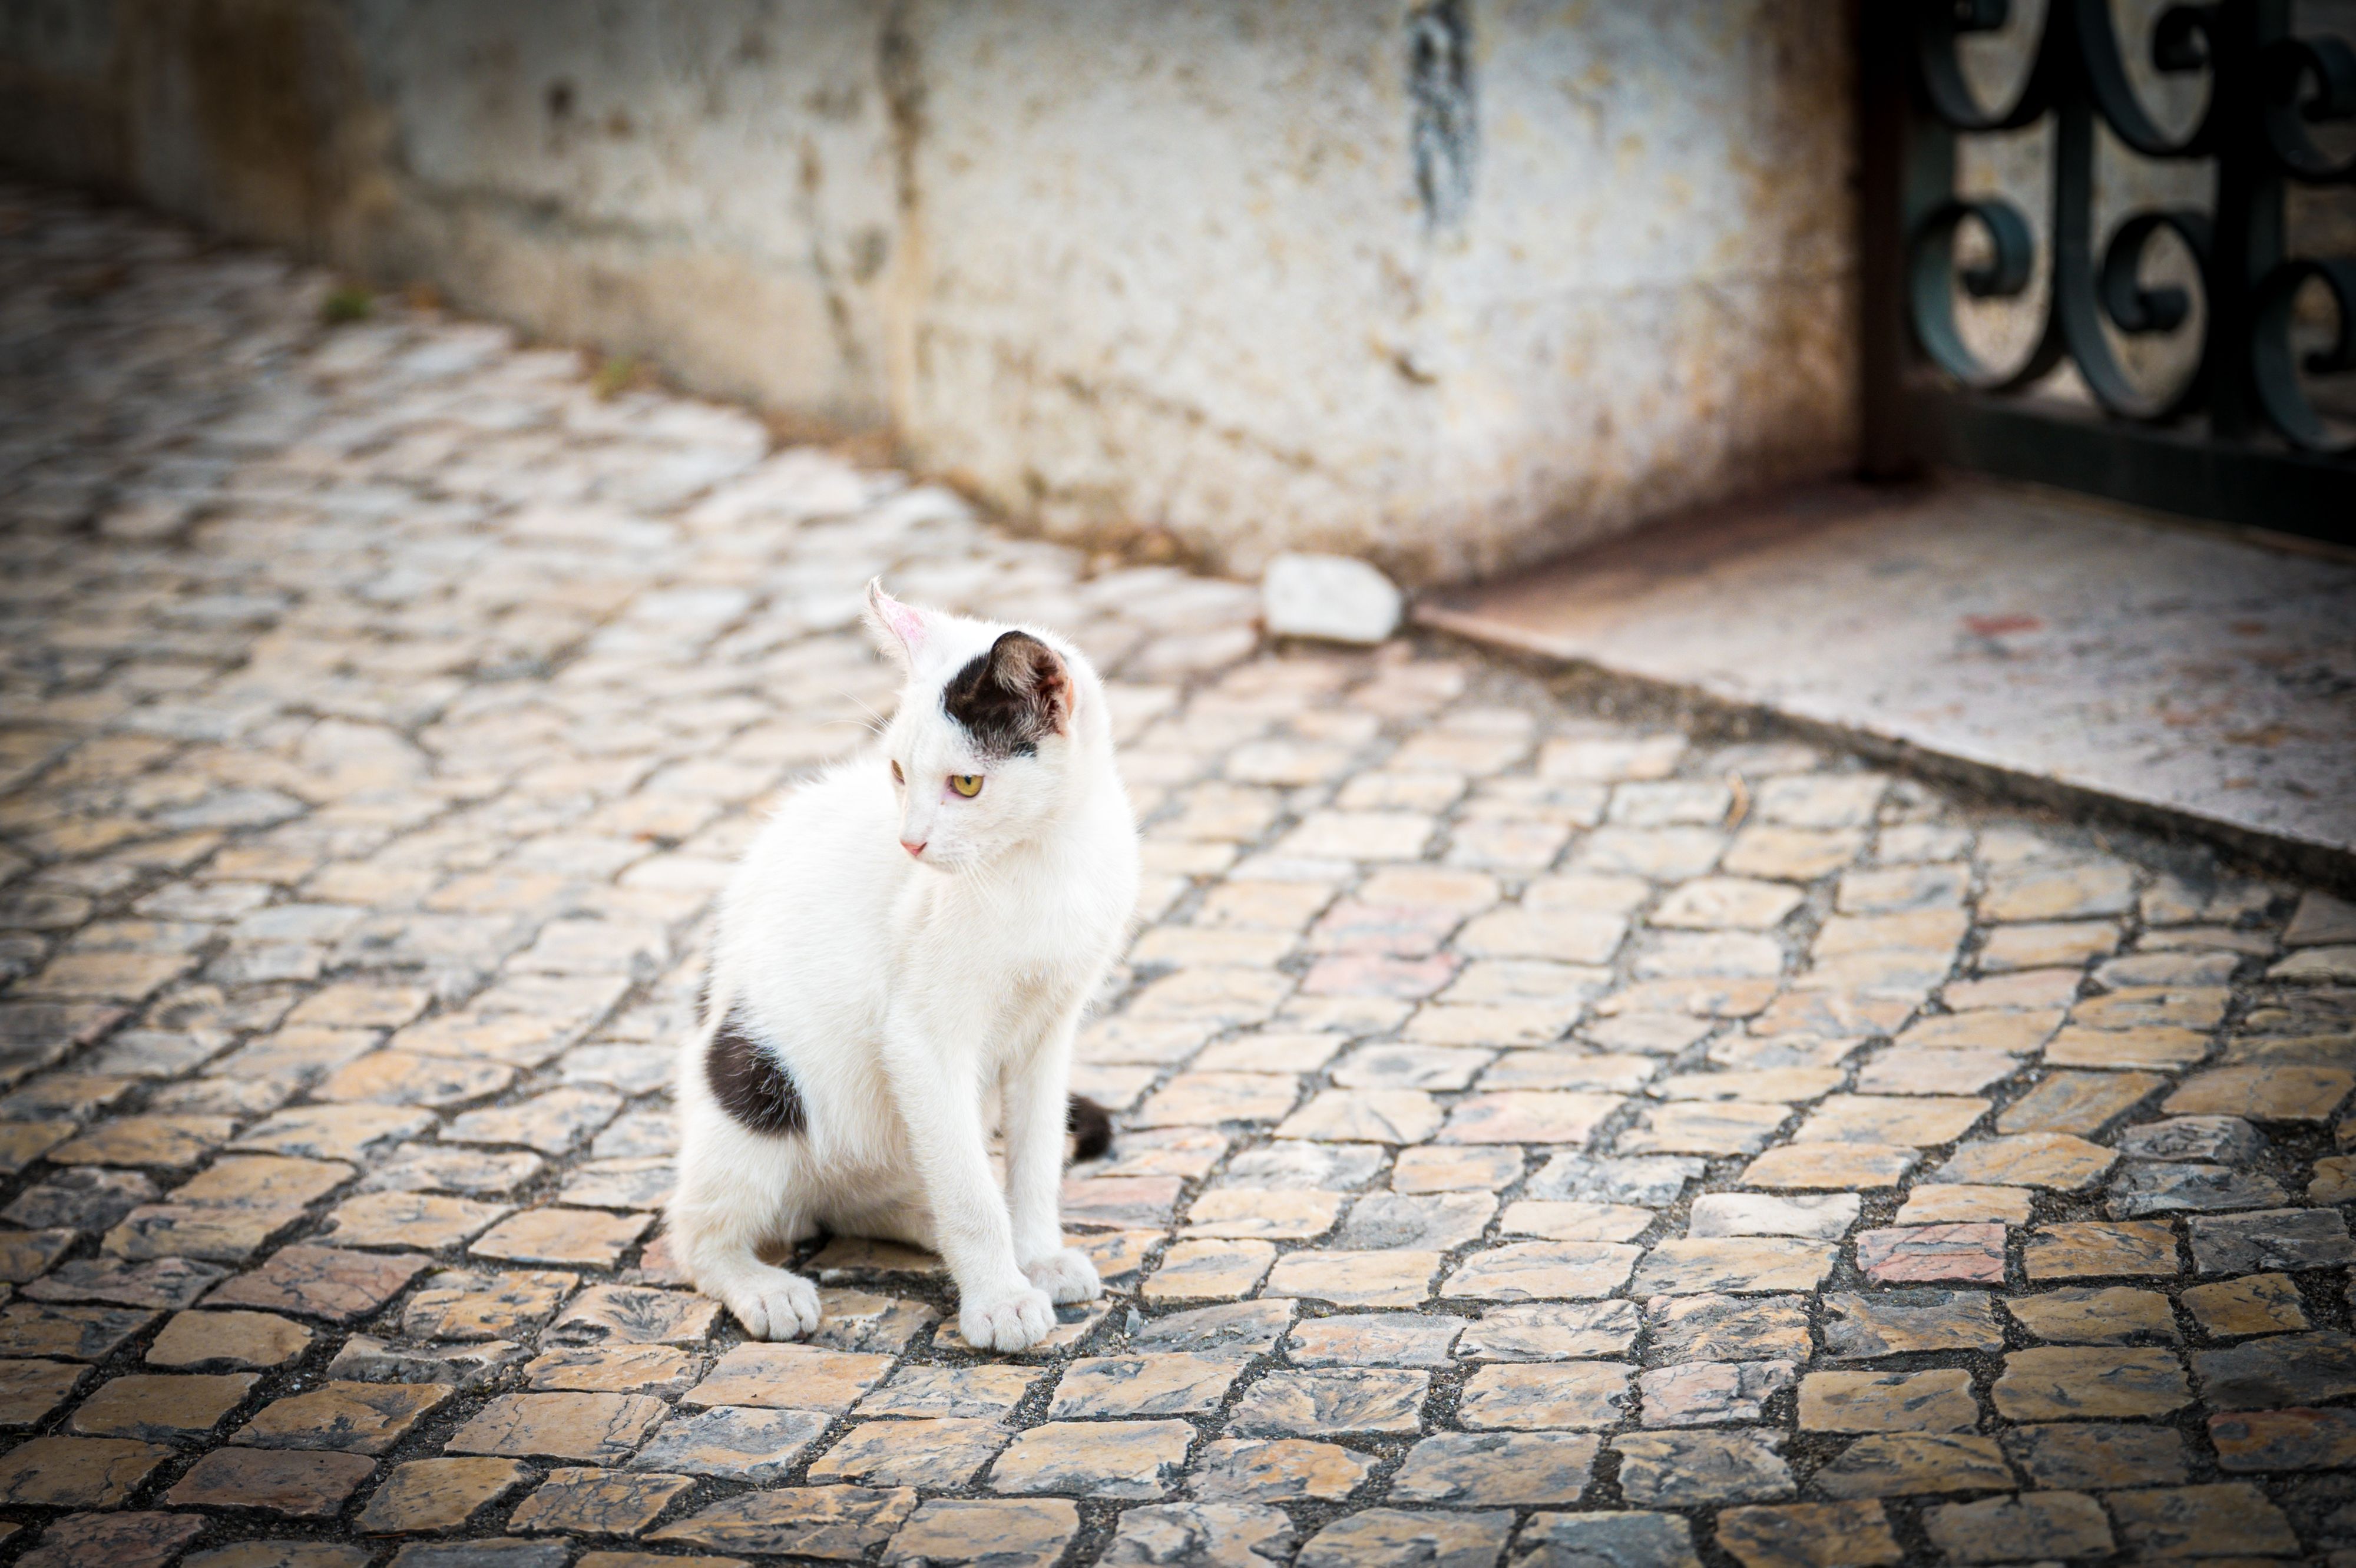 Cat sits alone on cobblestone street in Lisbon Portugal